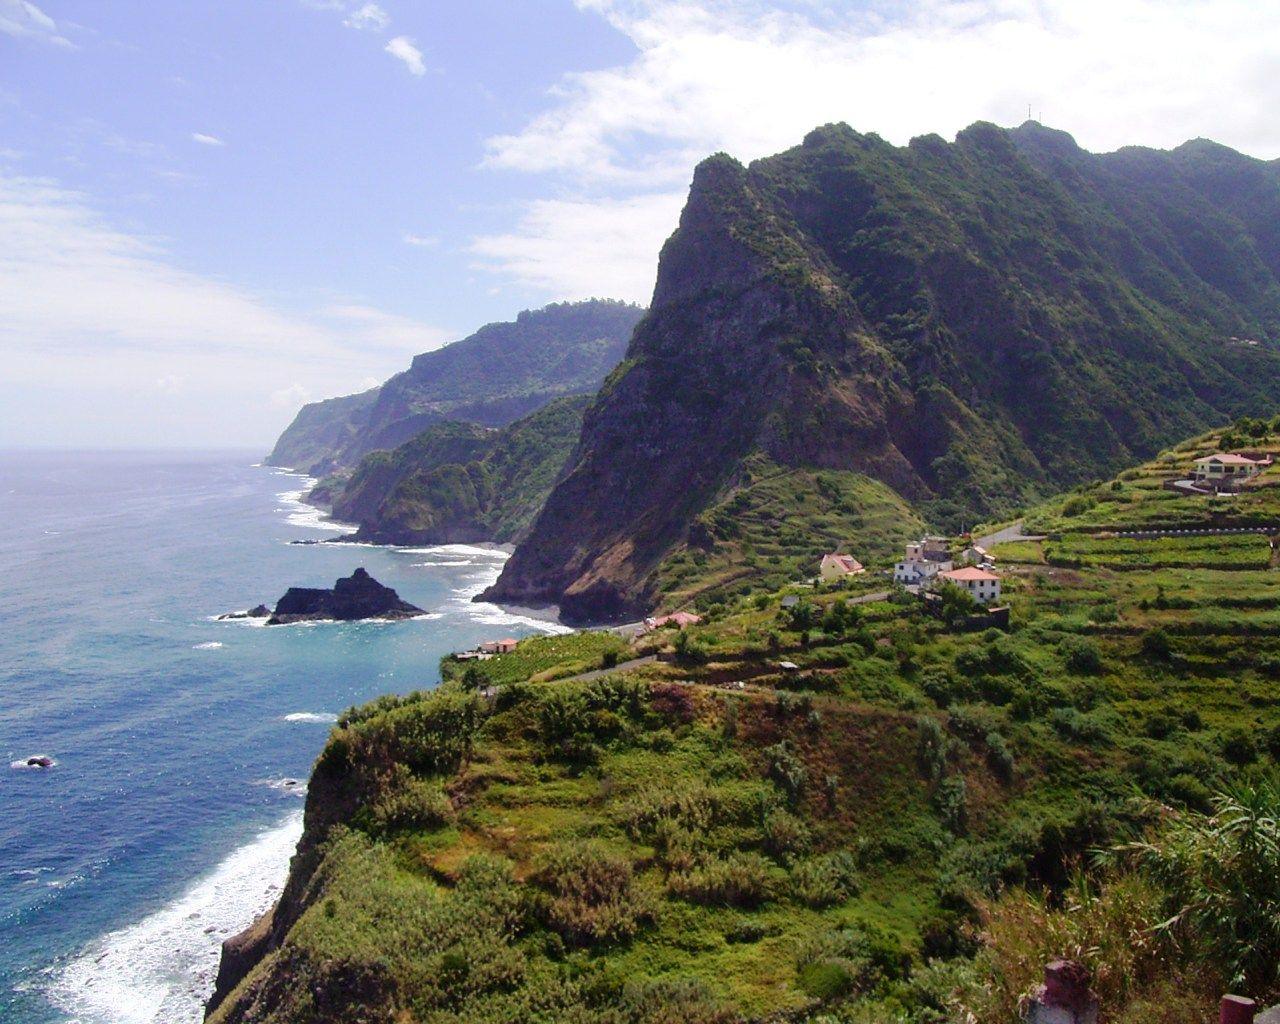 Download wallpaper of Madeira